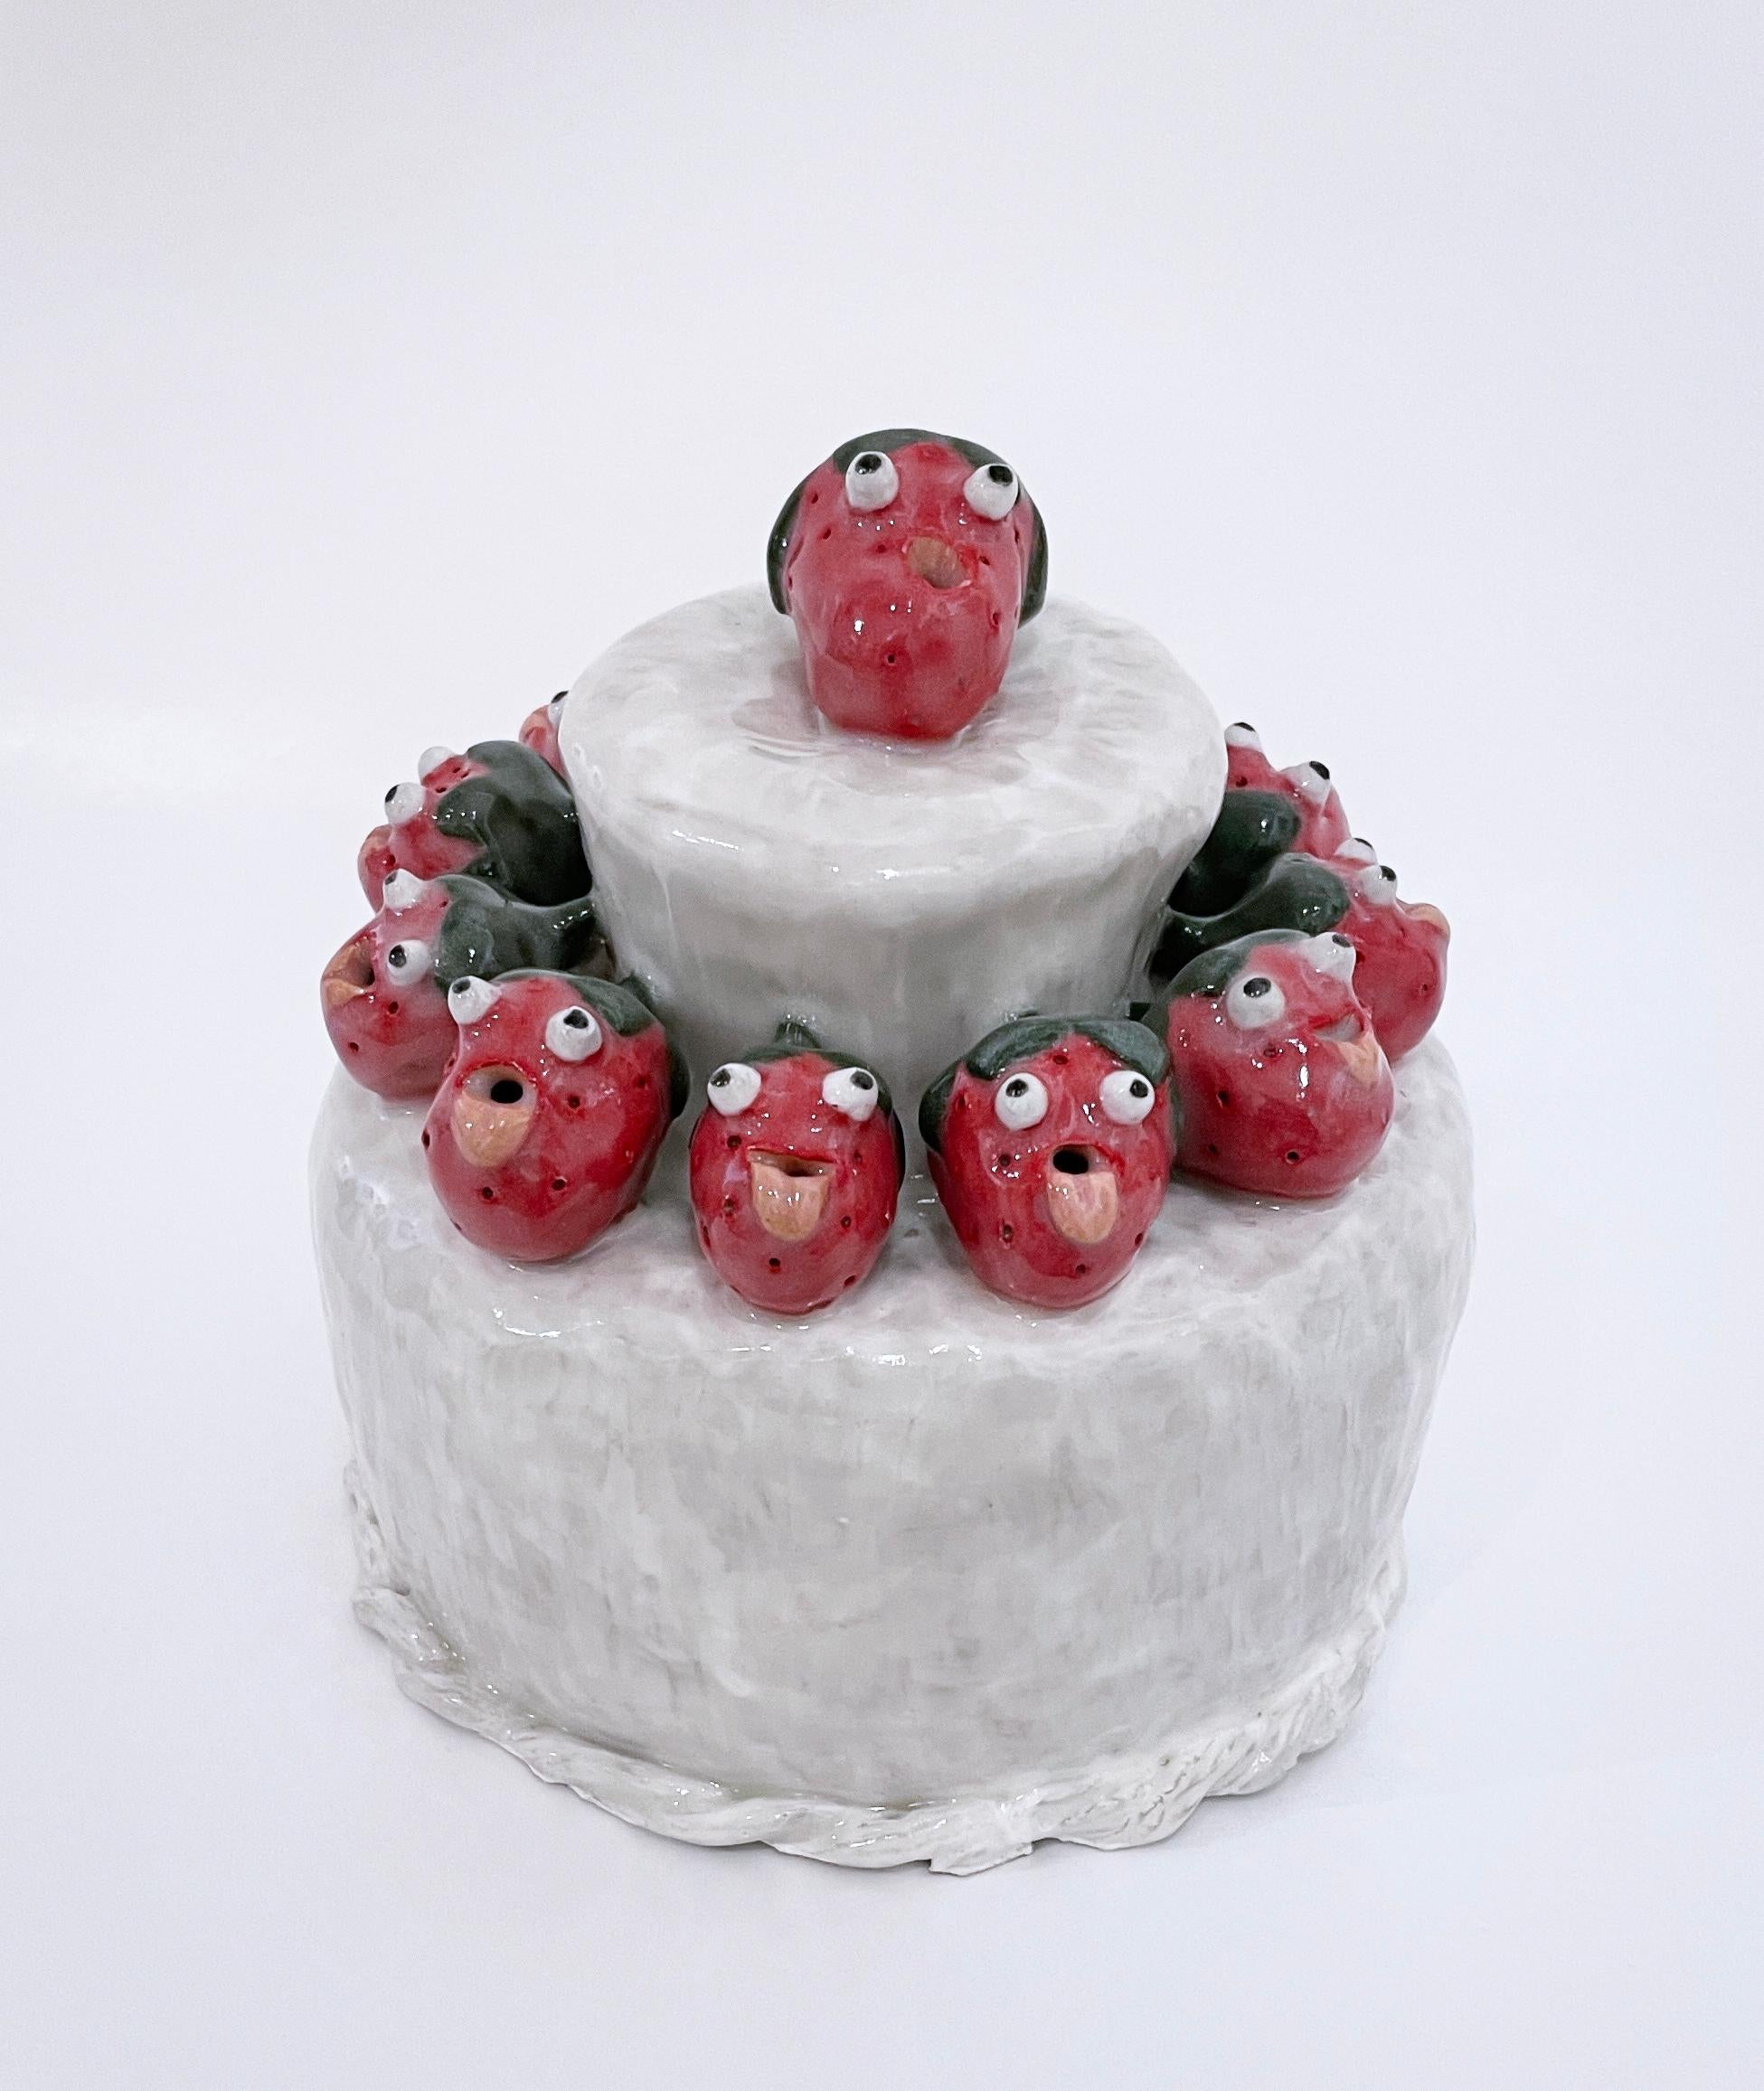 Sarah Hughes Still-Life Sculpture - Happy Birthday (2022), Glazed ceramic cake sculpture with strawberry faces